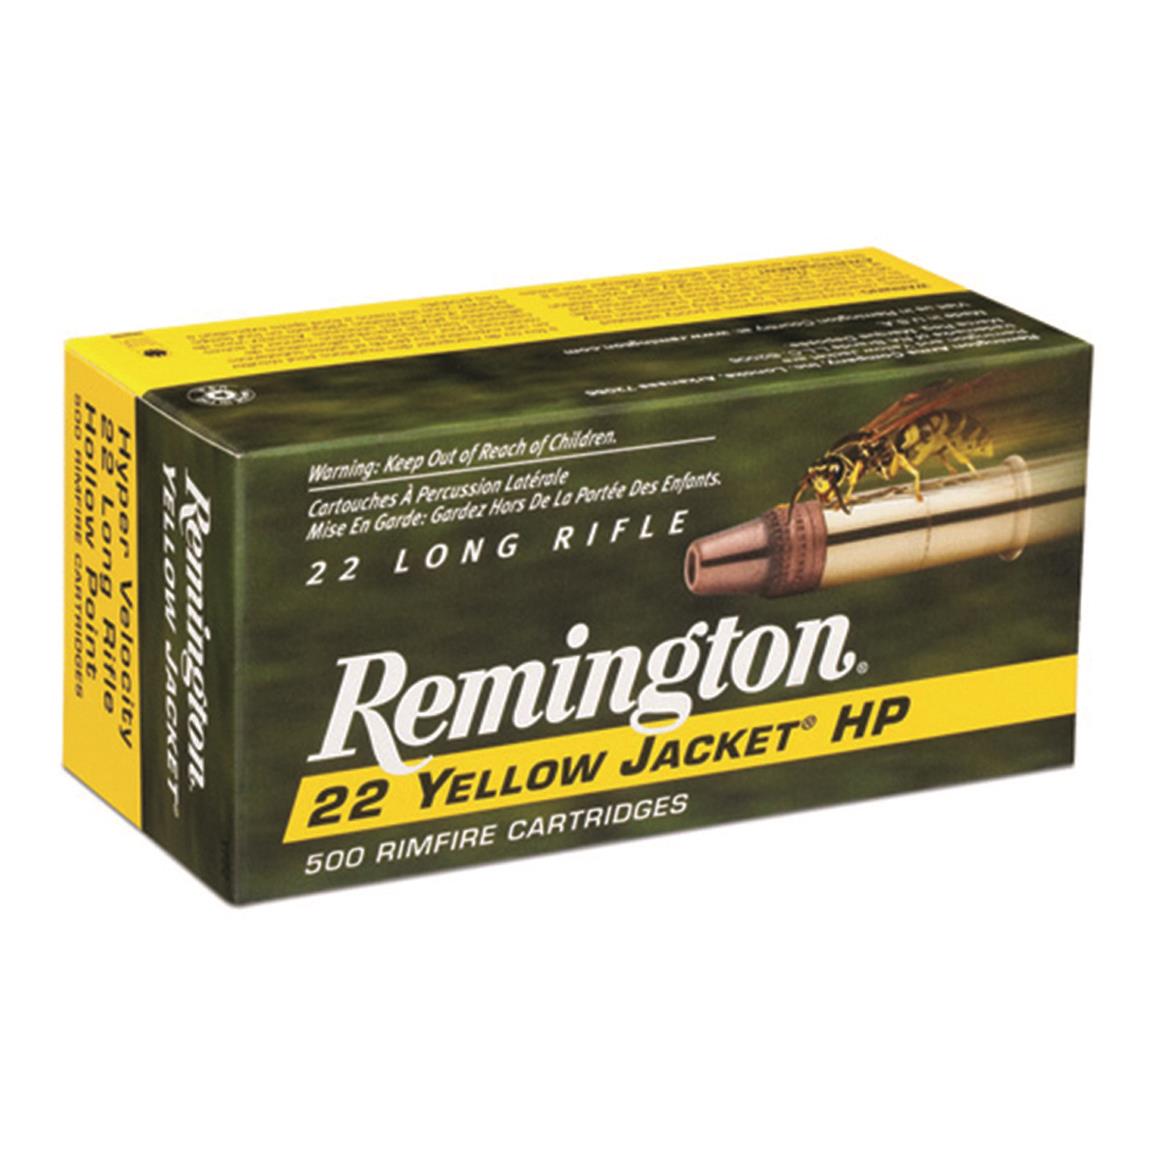 Remington 22 Yellow Jacket, .22LR, Hollow Point, 33 Grain, 500 rds.